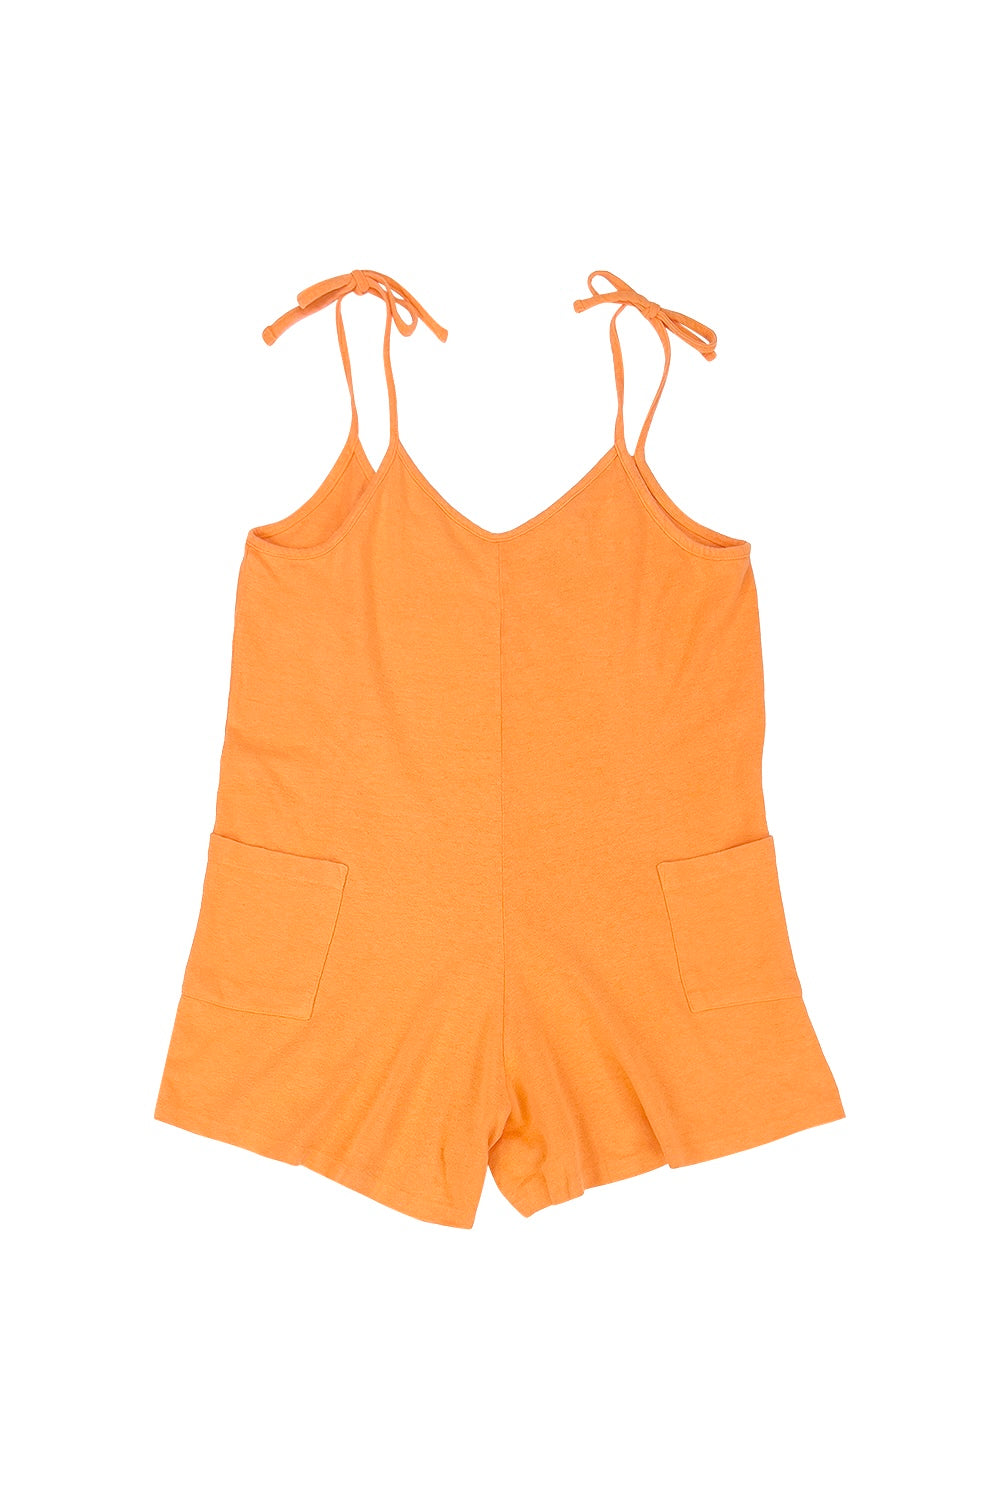 Sespe Short | Jungmaven Hemp Clothing & Accessories / Color: Apricot Crush